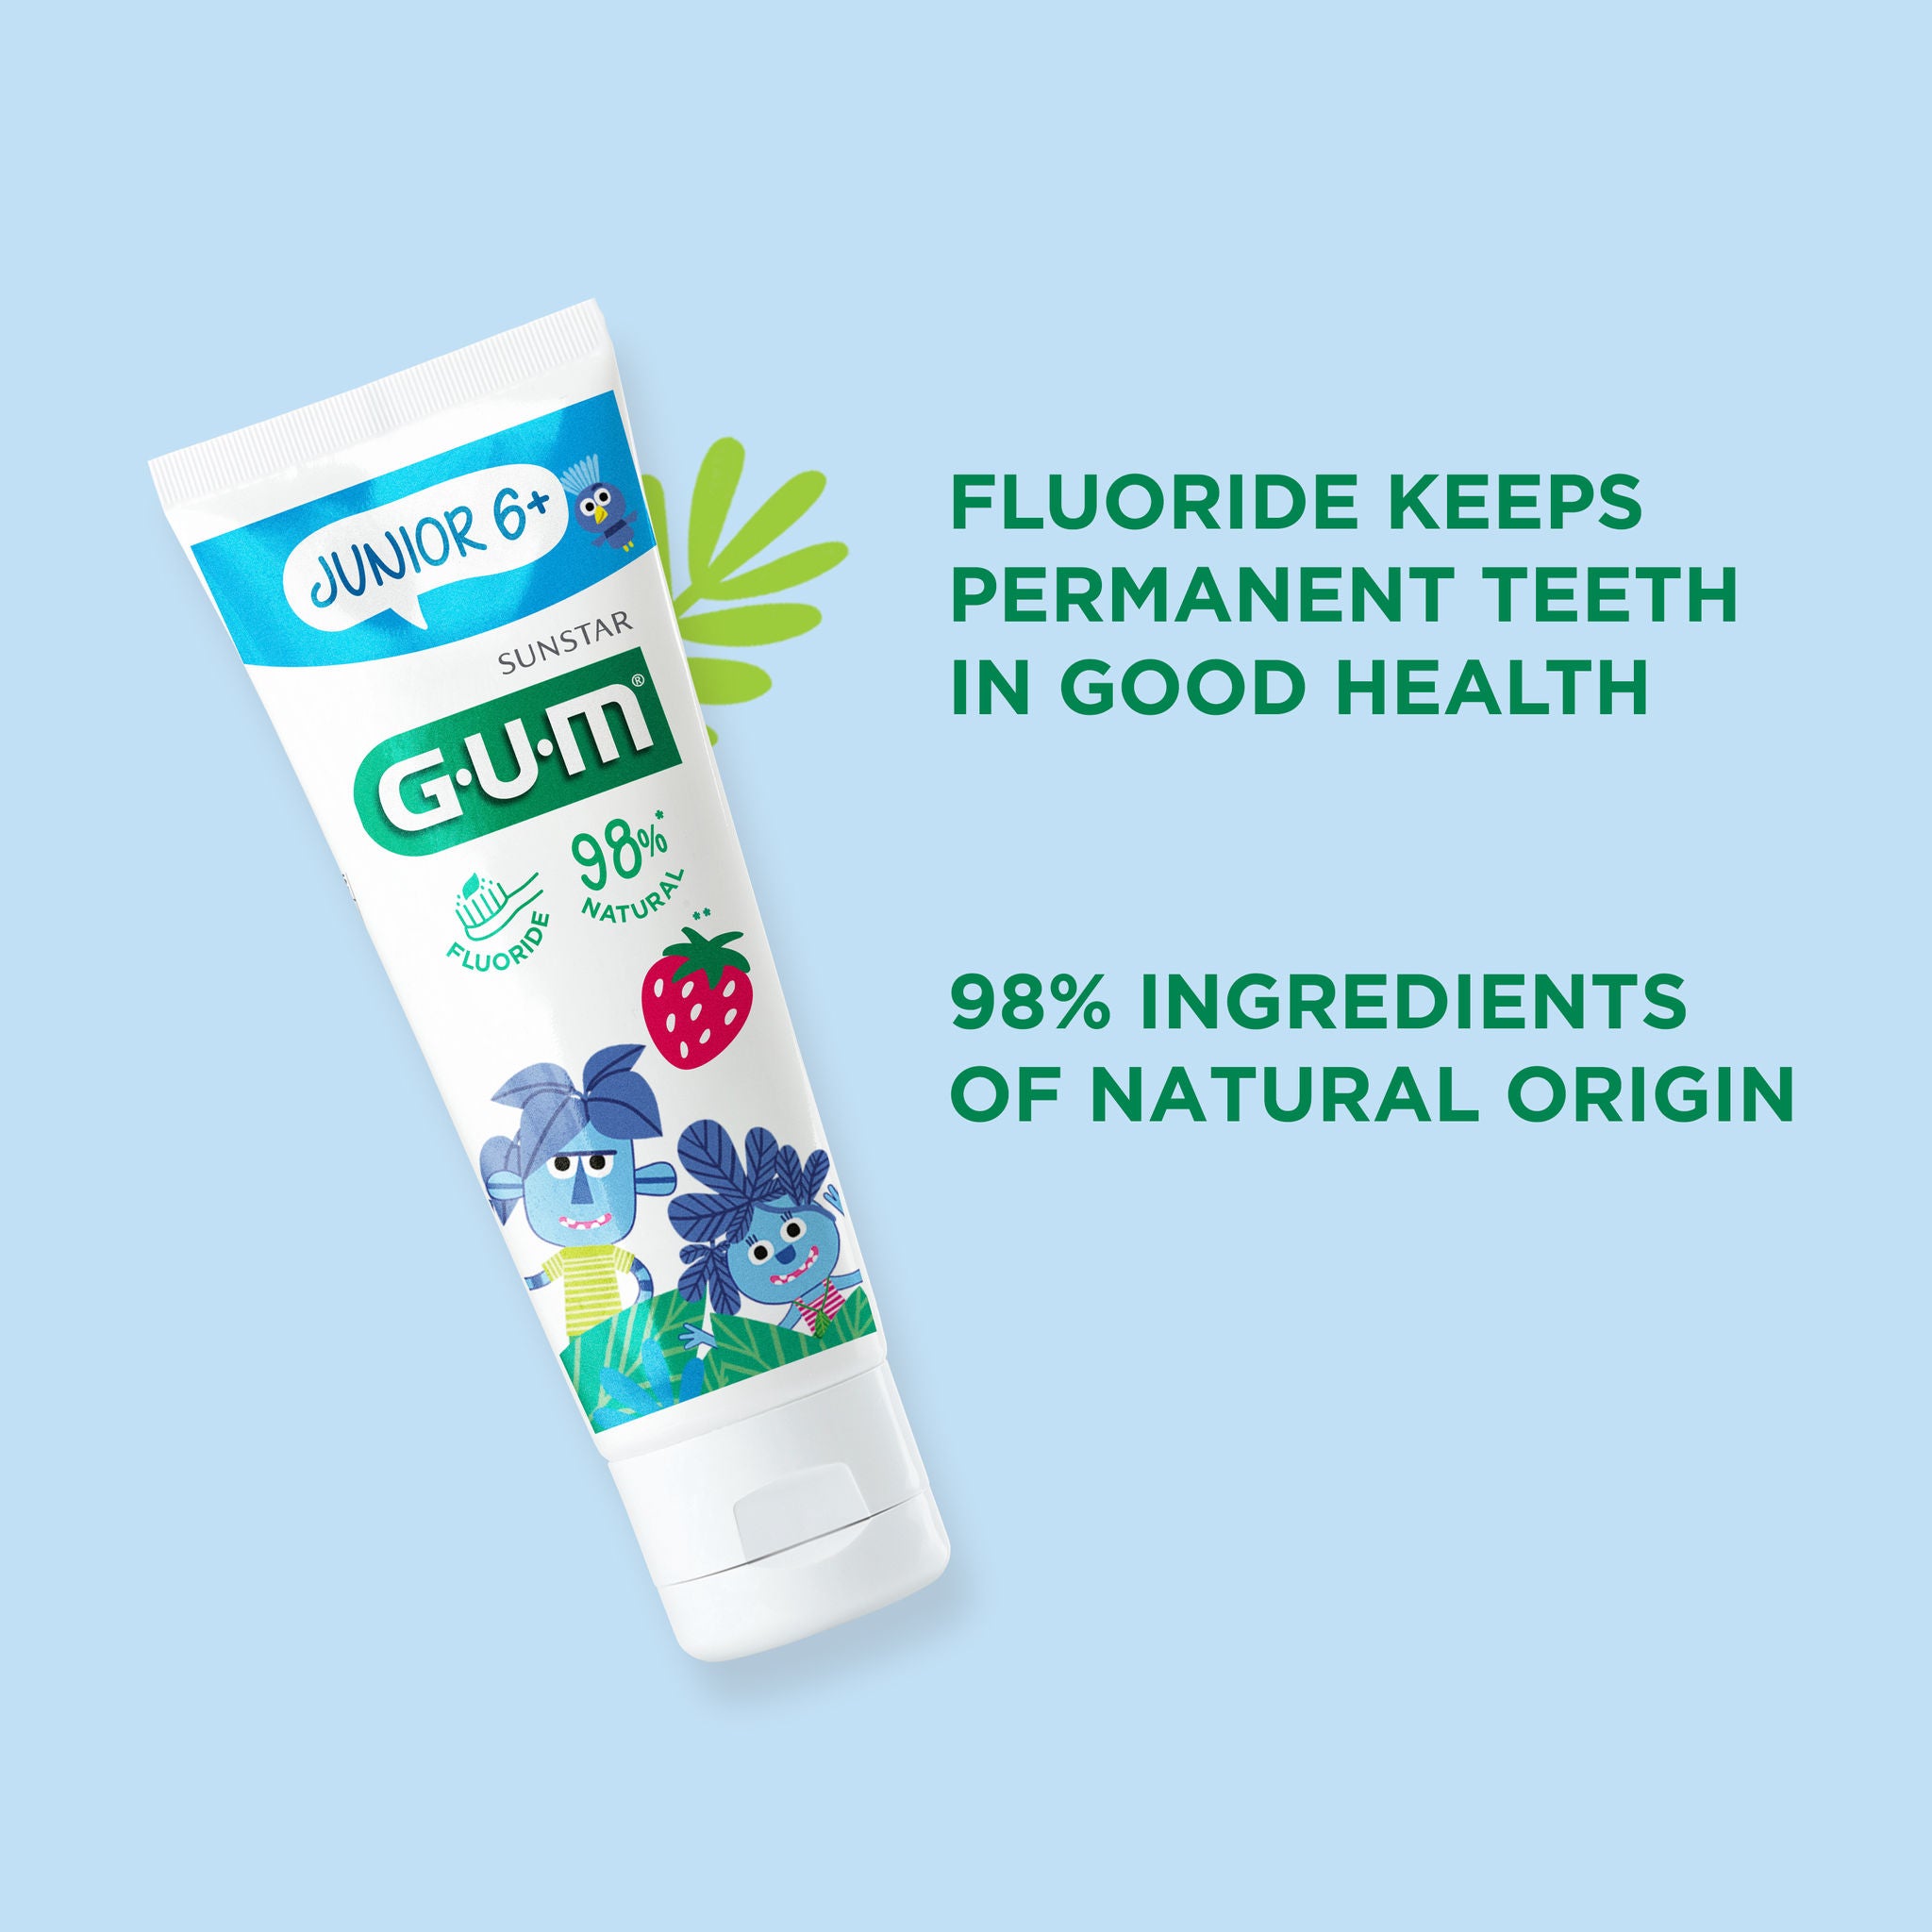 GUM JUNIOR 6+ Toothpaste slightly tilted